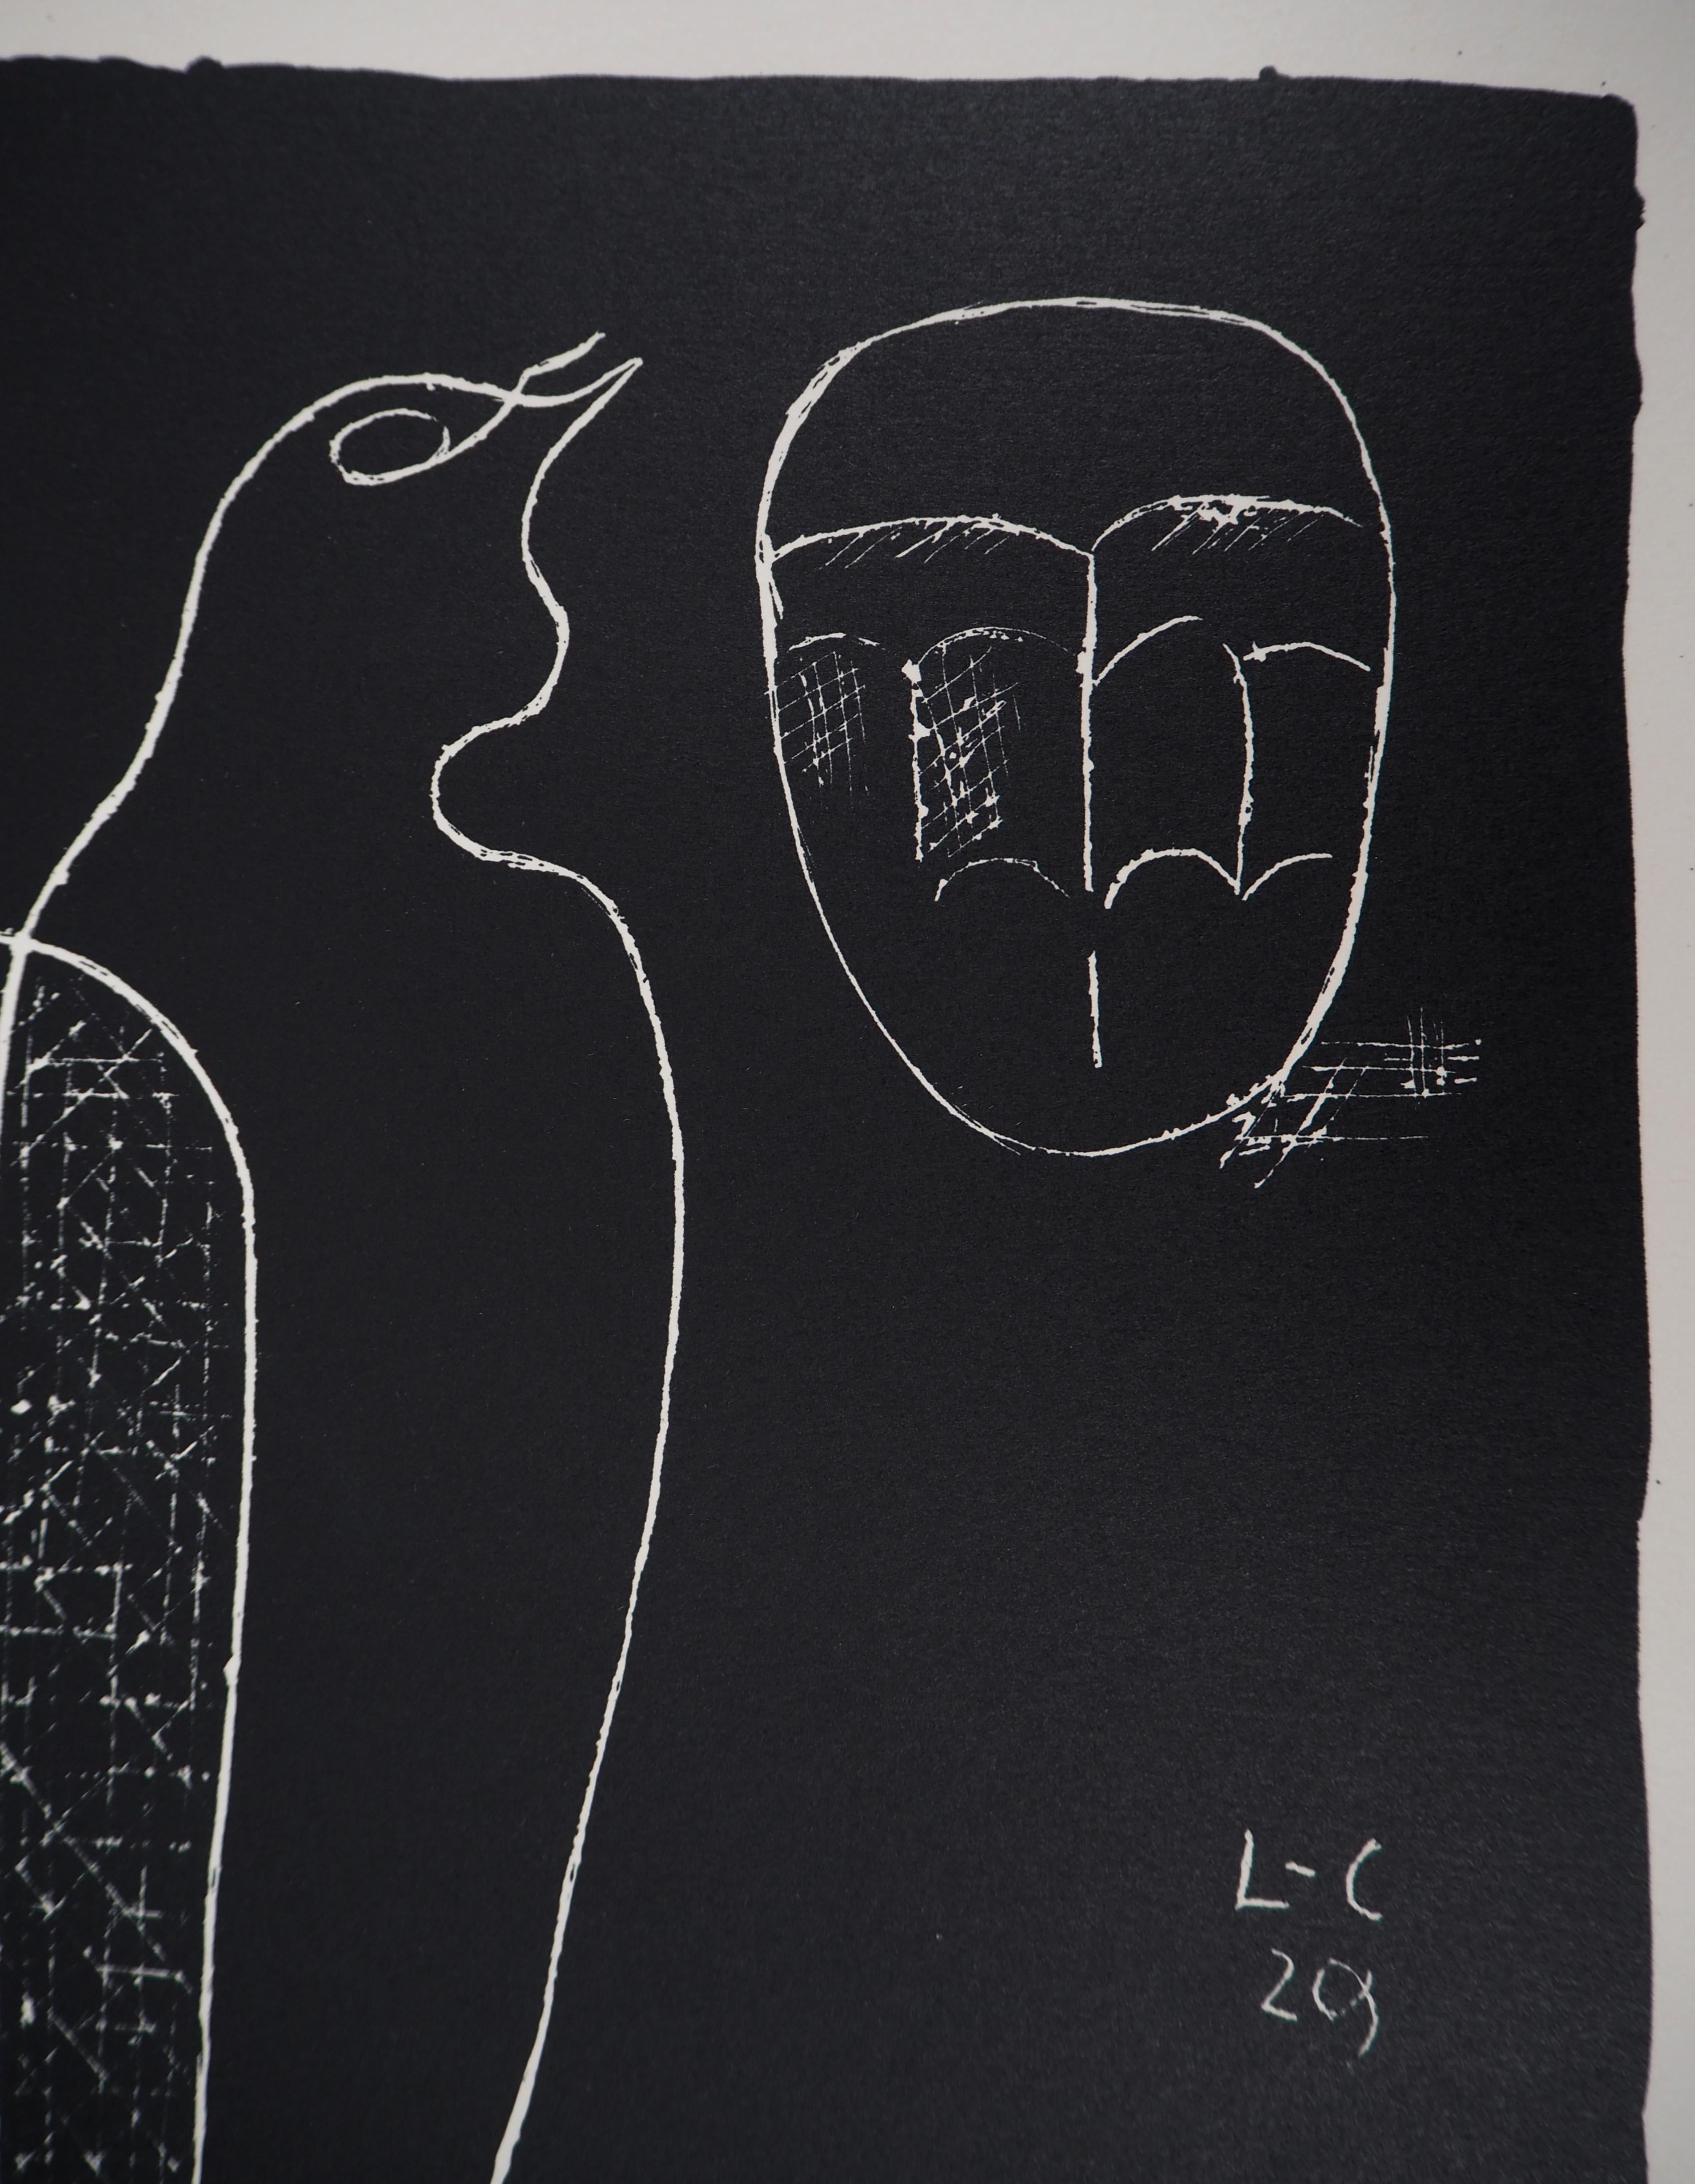 Still Life with Hand - Original lithograph (Atelier Michel Cassé), 1964 - Black Figurative Print by Le Corbusier